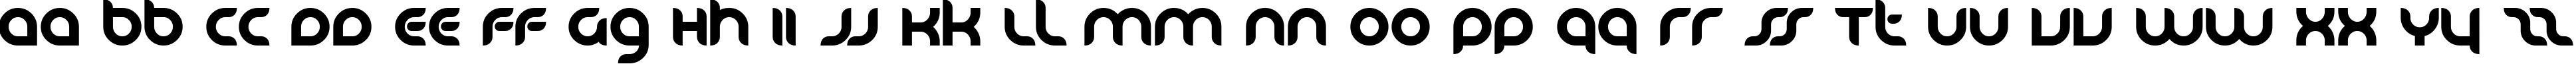 Пример написания английского алфавита шрифтом Danube Bold